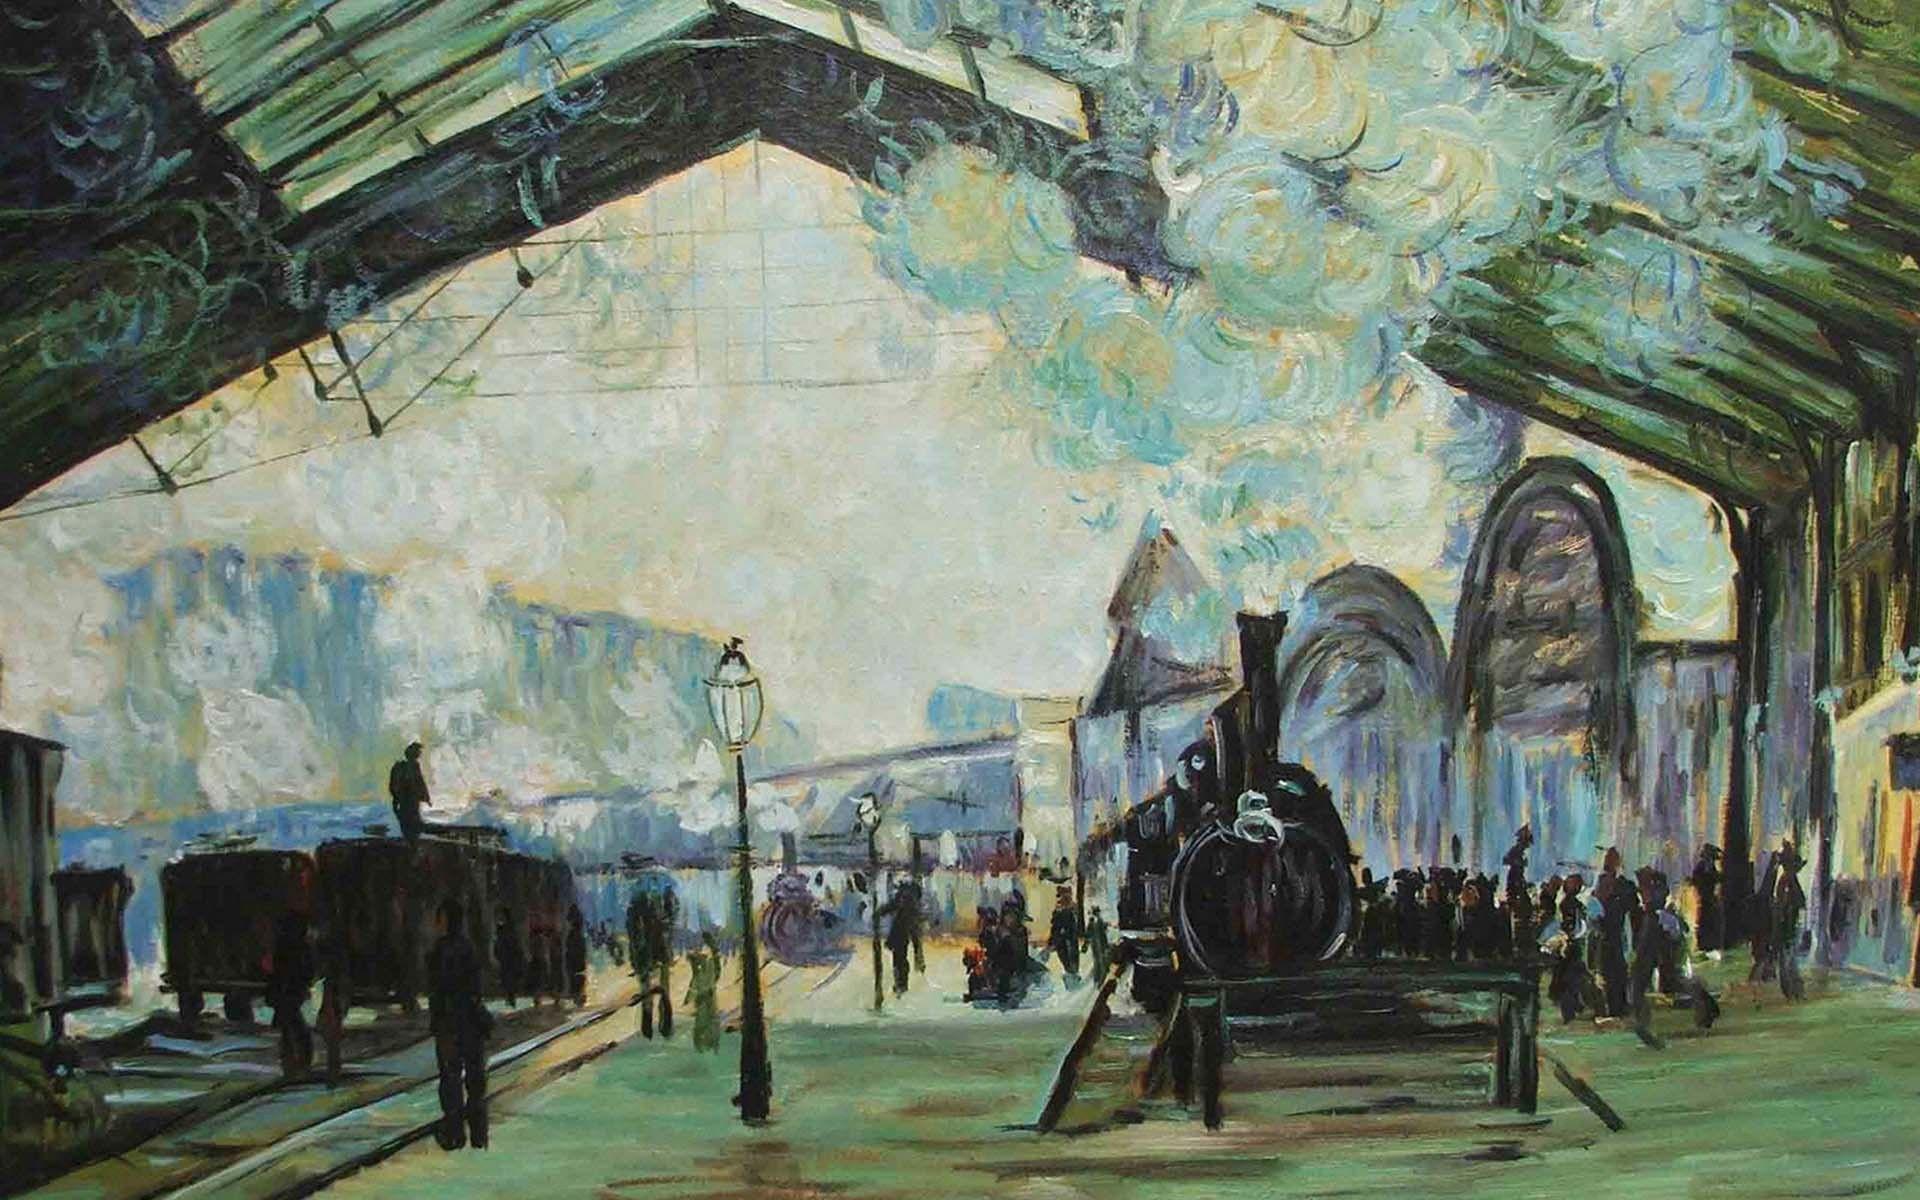 Painting Claude Monet